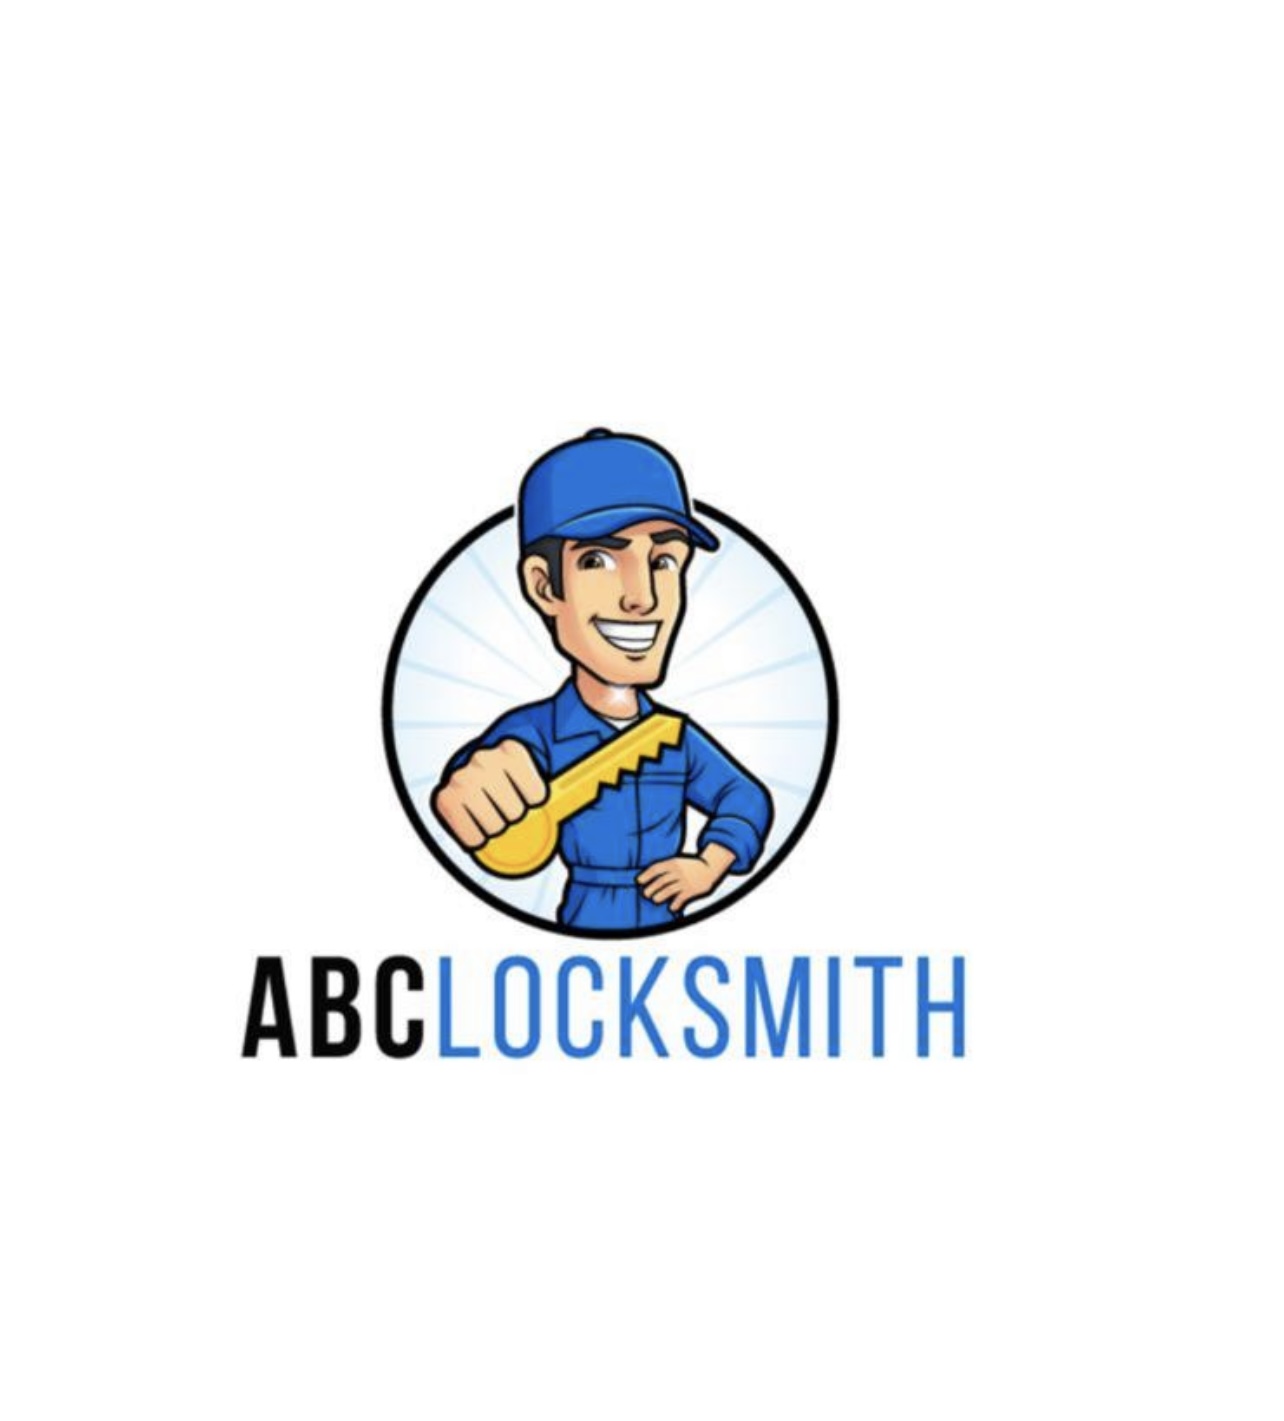 ABC locksmith Indianapolis